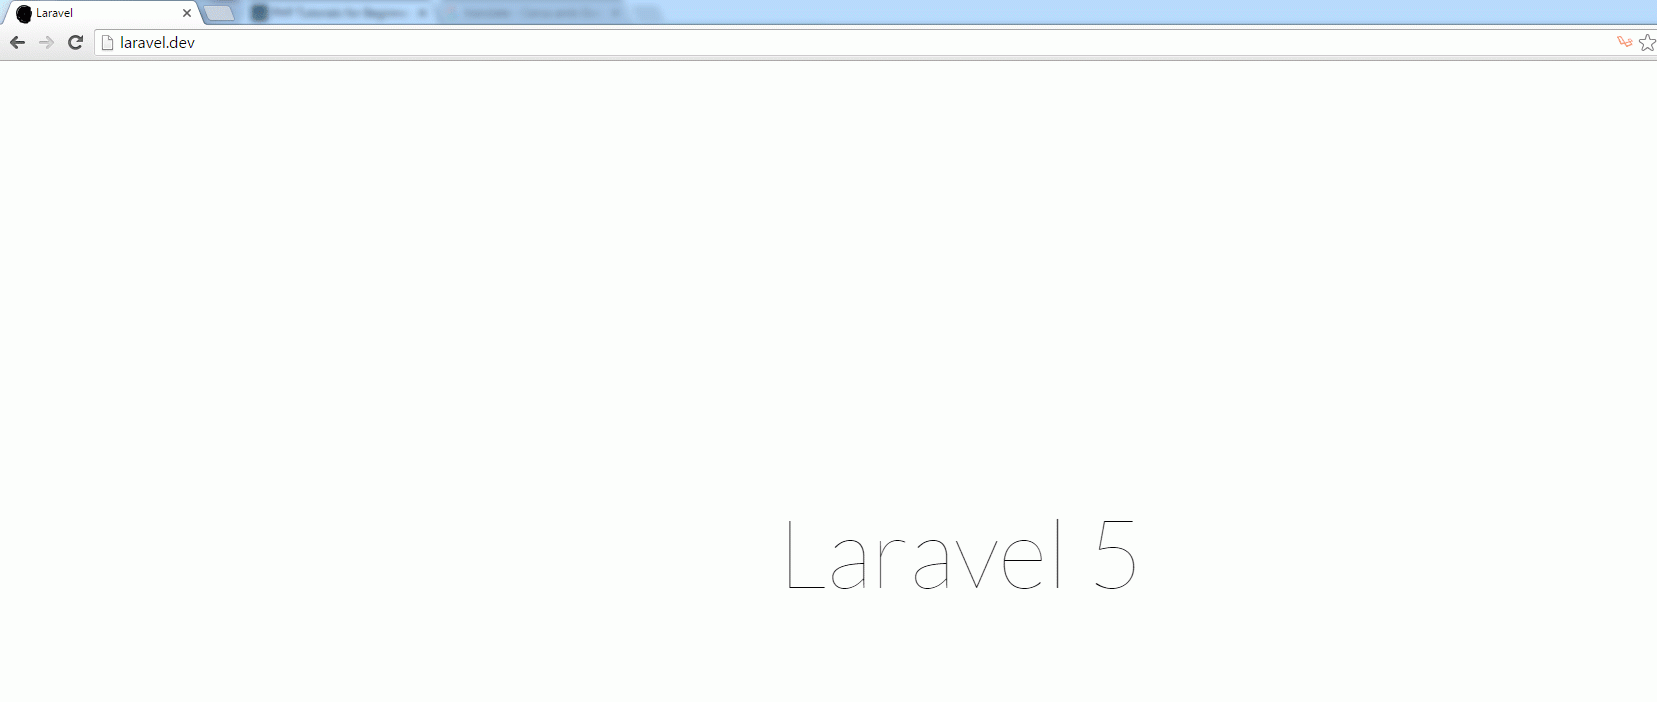 laravel.dev